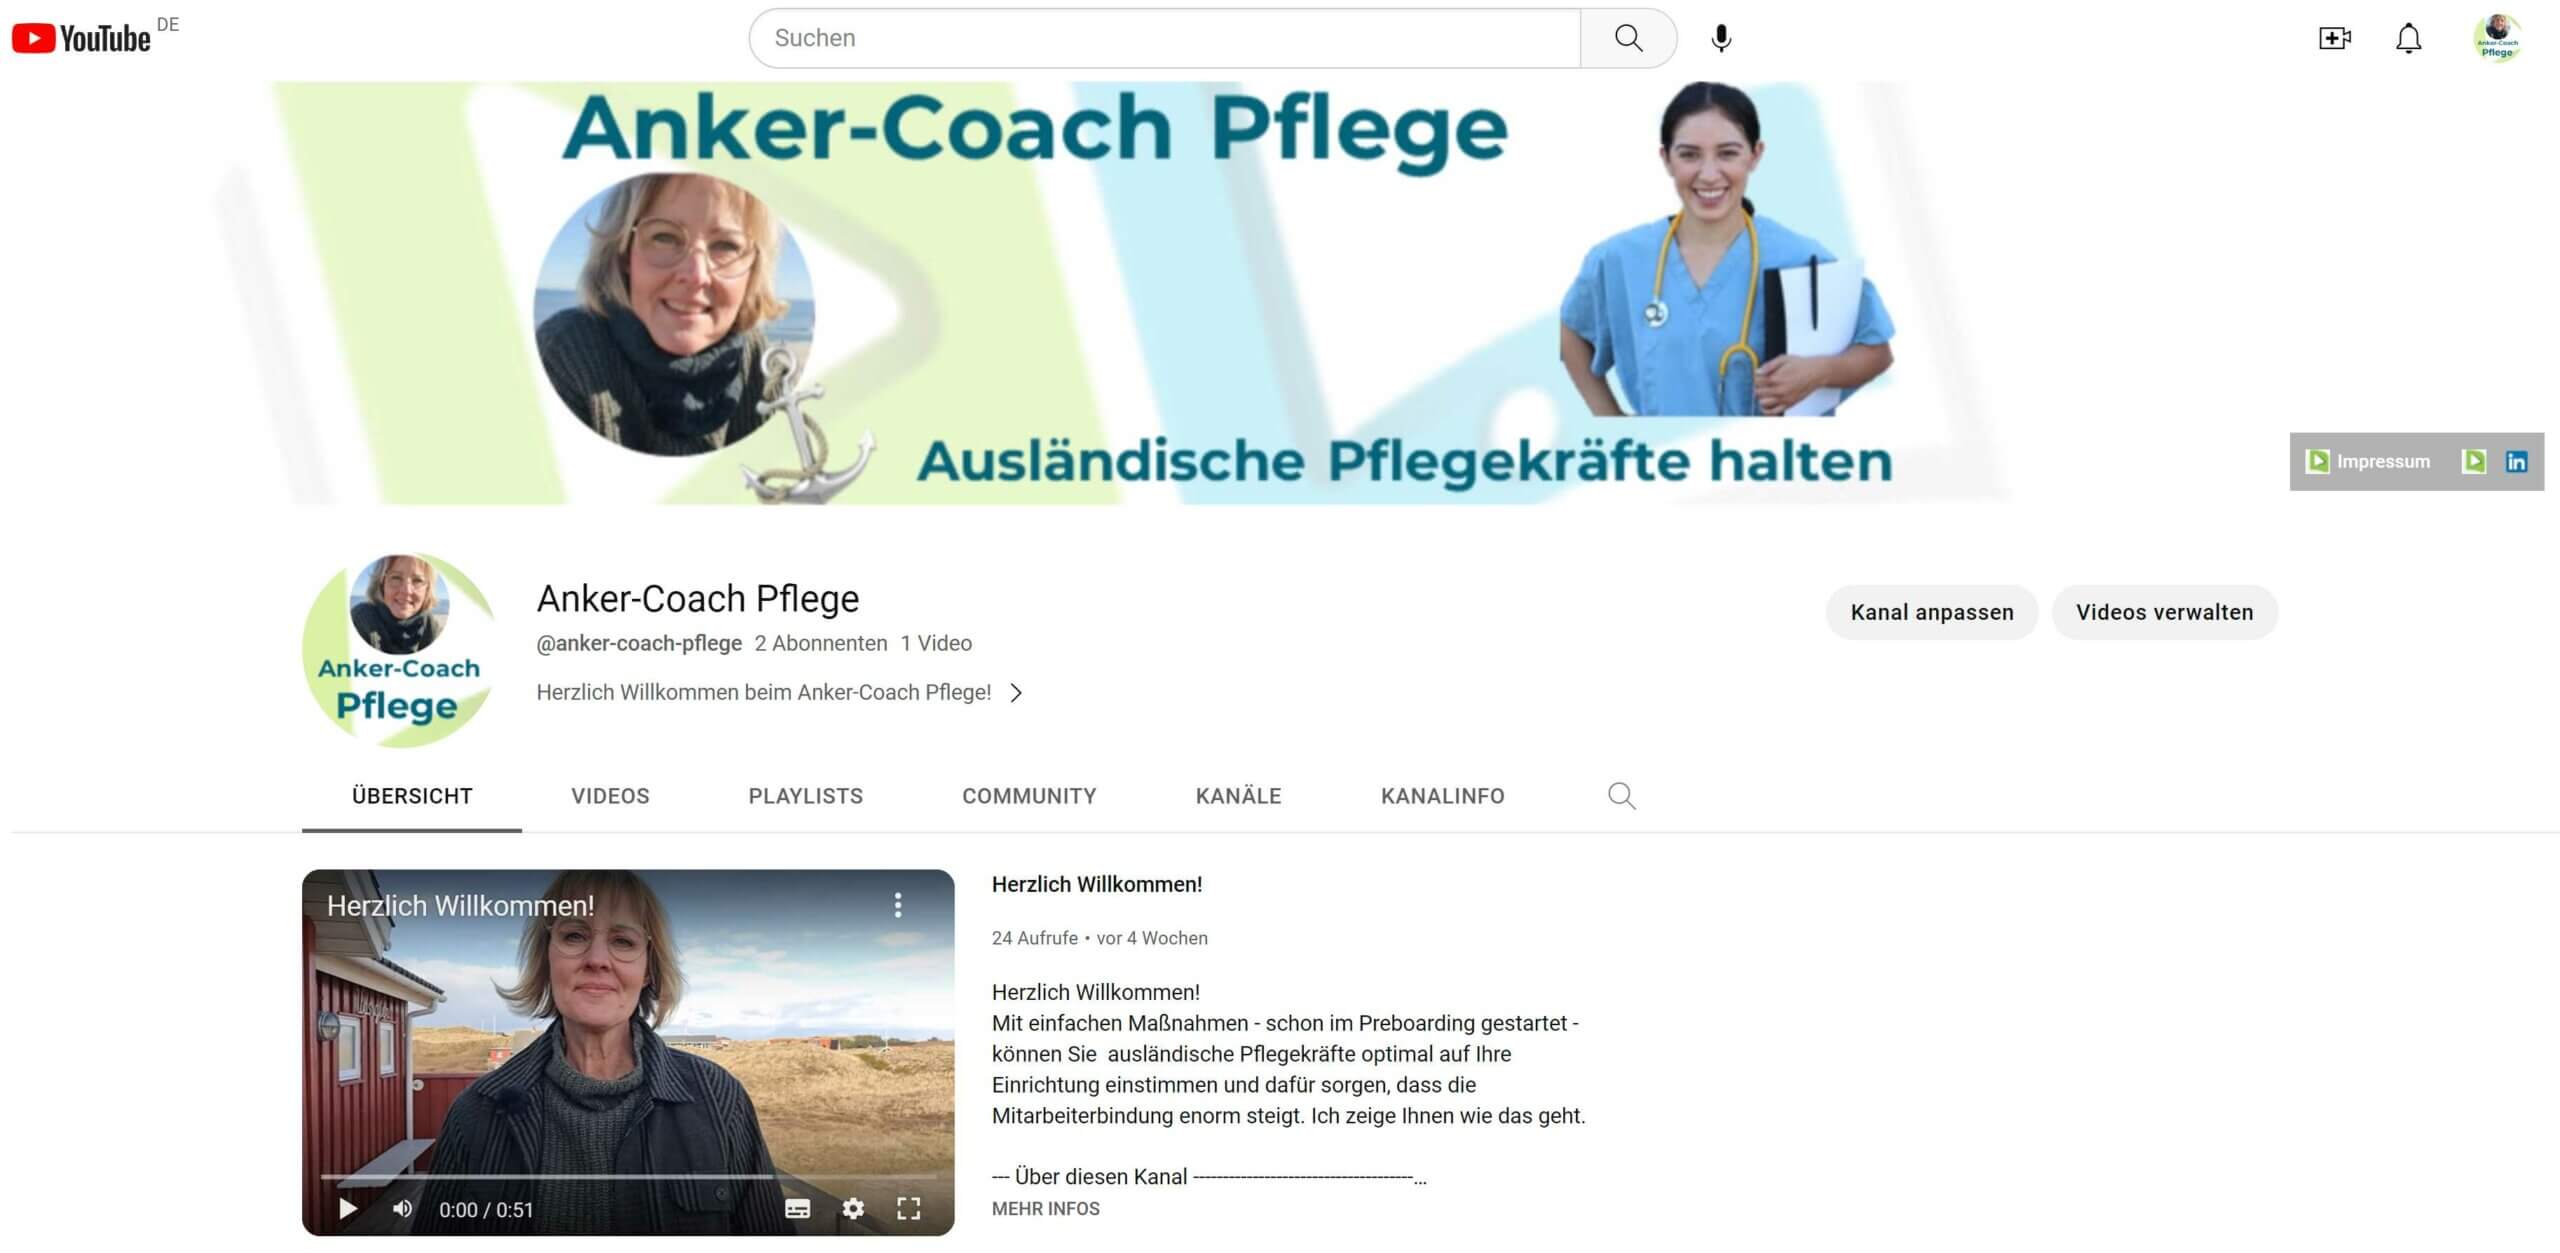 2023-04-09 09_43_46-Anker-Coach Pflege - YouTube - Christine Mehl